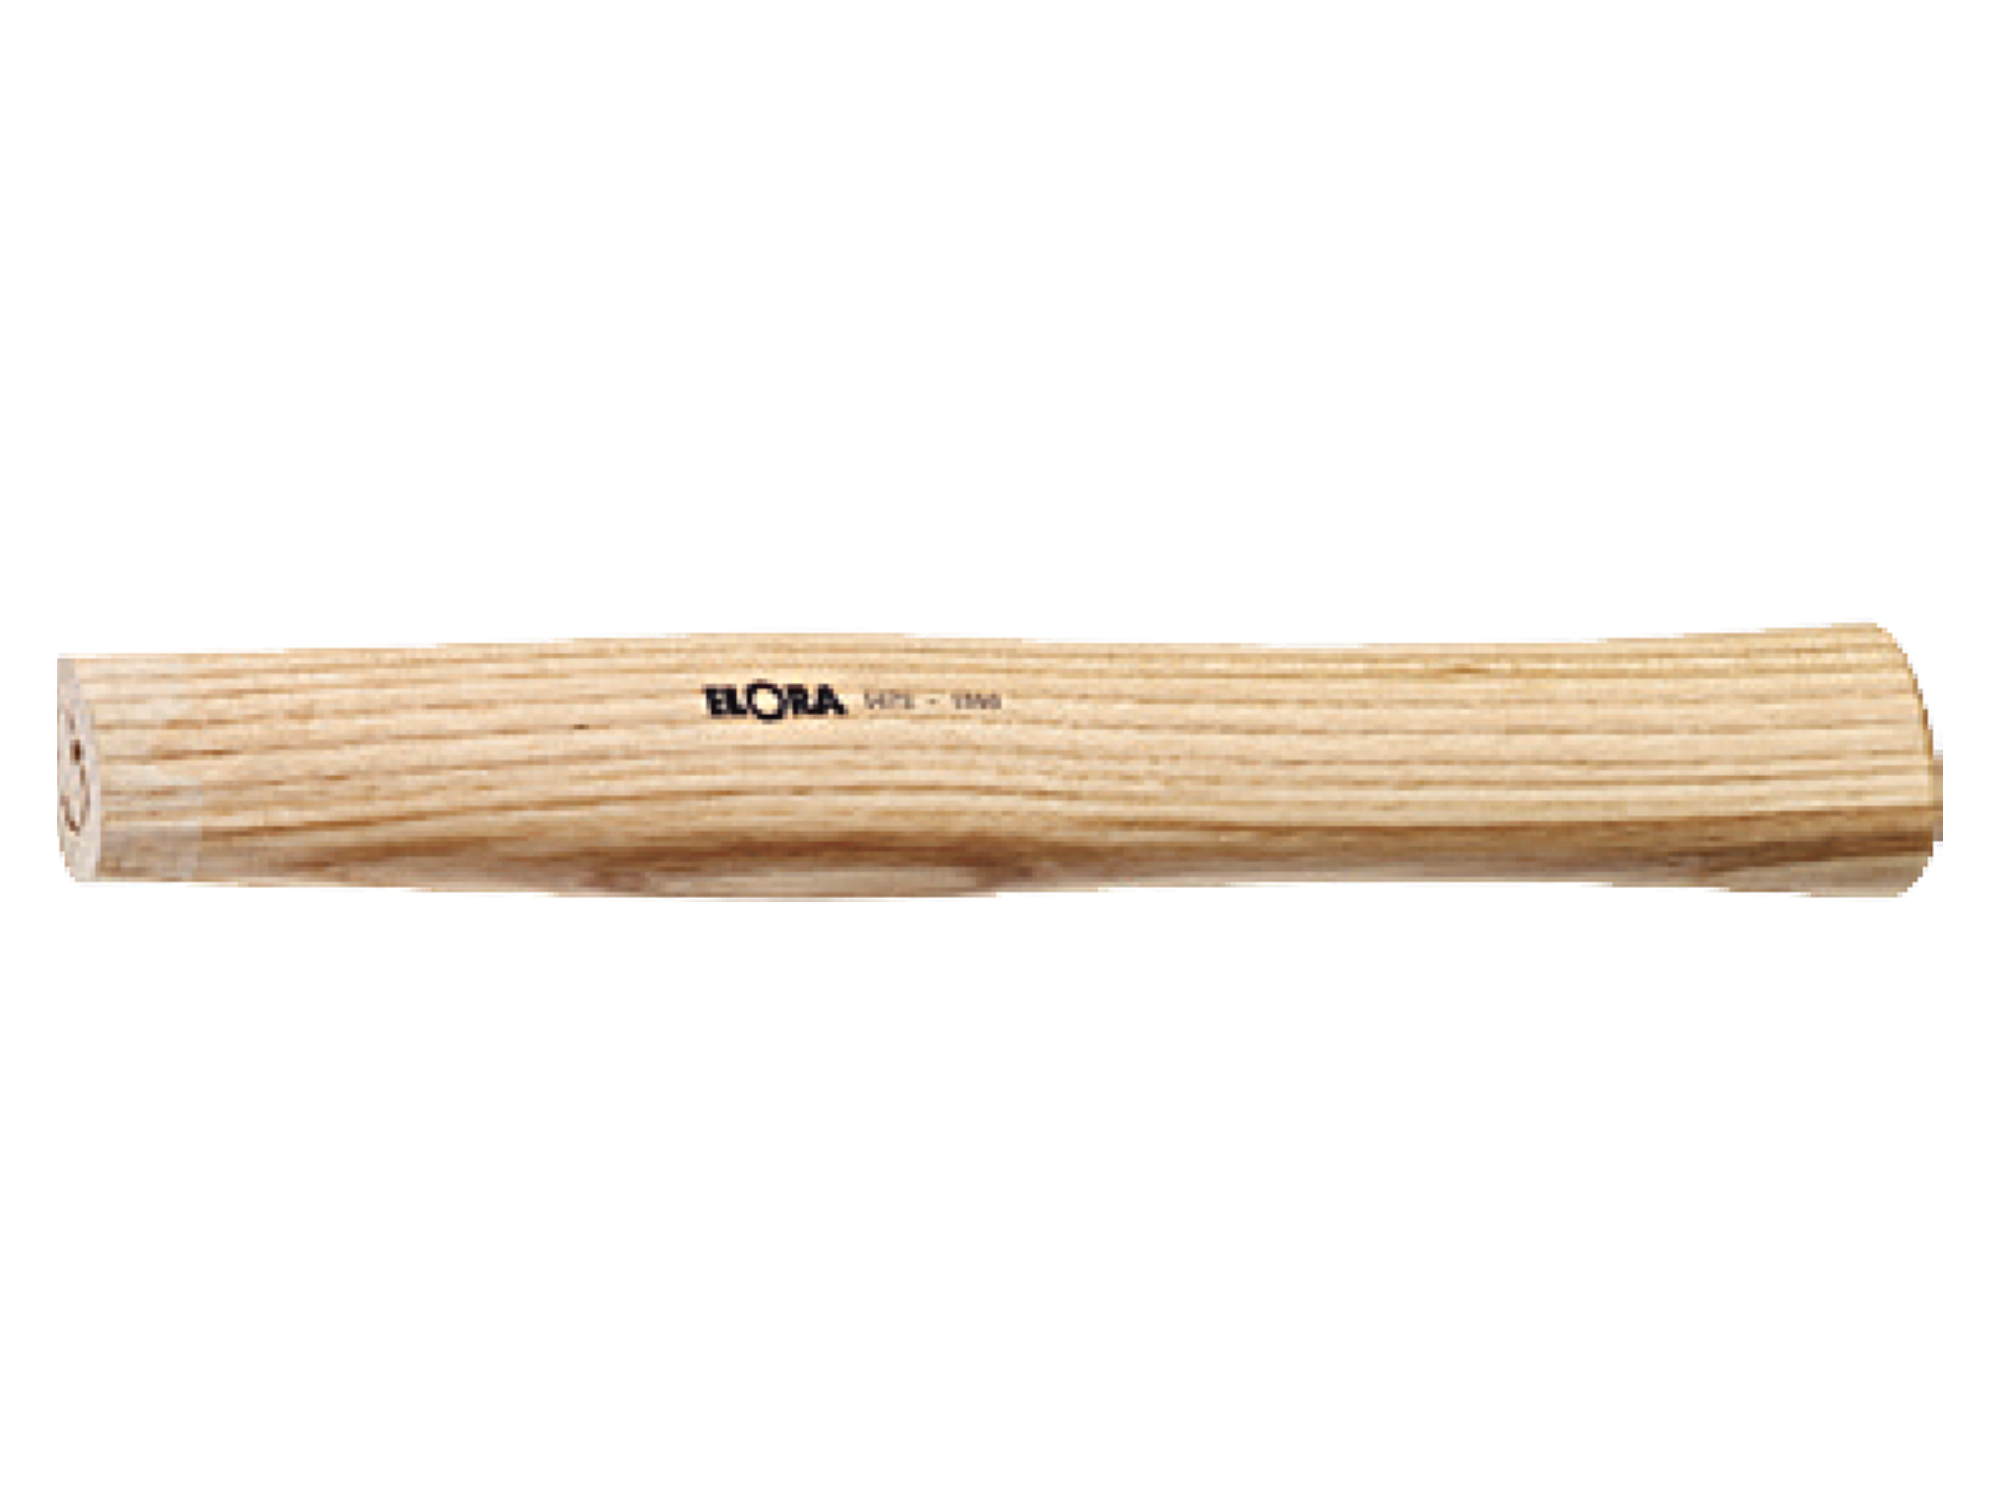 ELORA 1670ST Handle For Engineers Hammer (ELORA Tools) - Premium Engineers Hammer from ELORA - Shop now at Yew Aik.